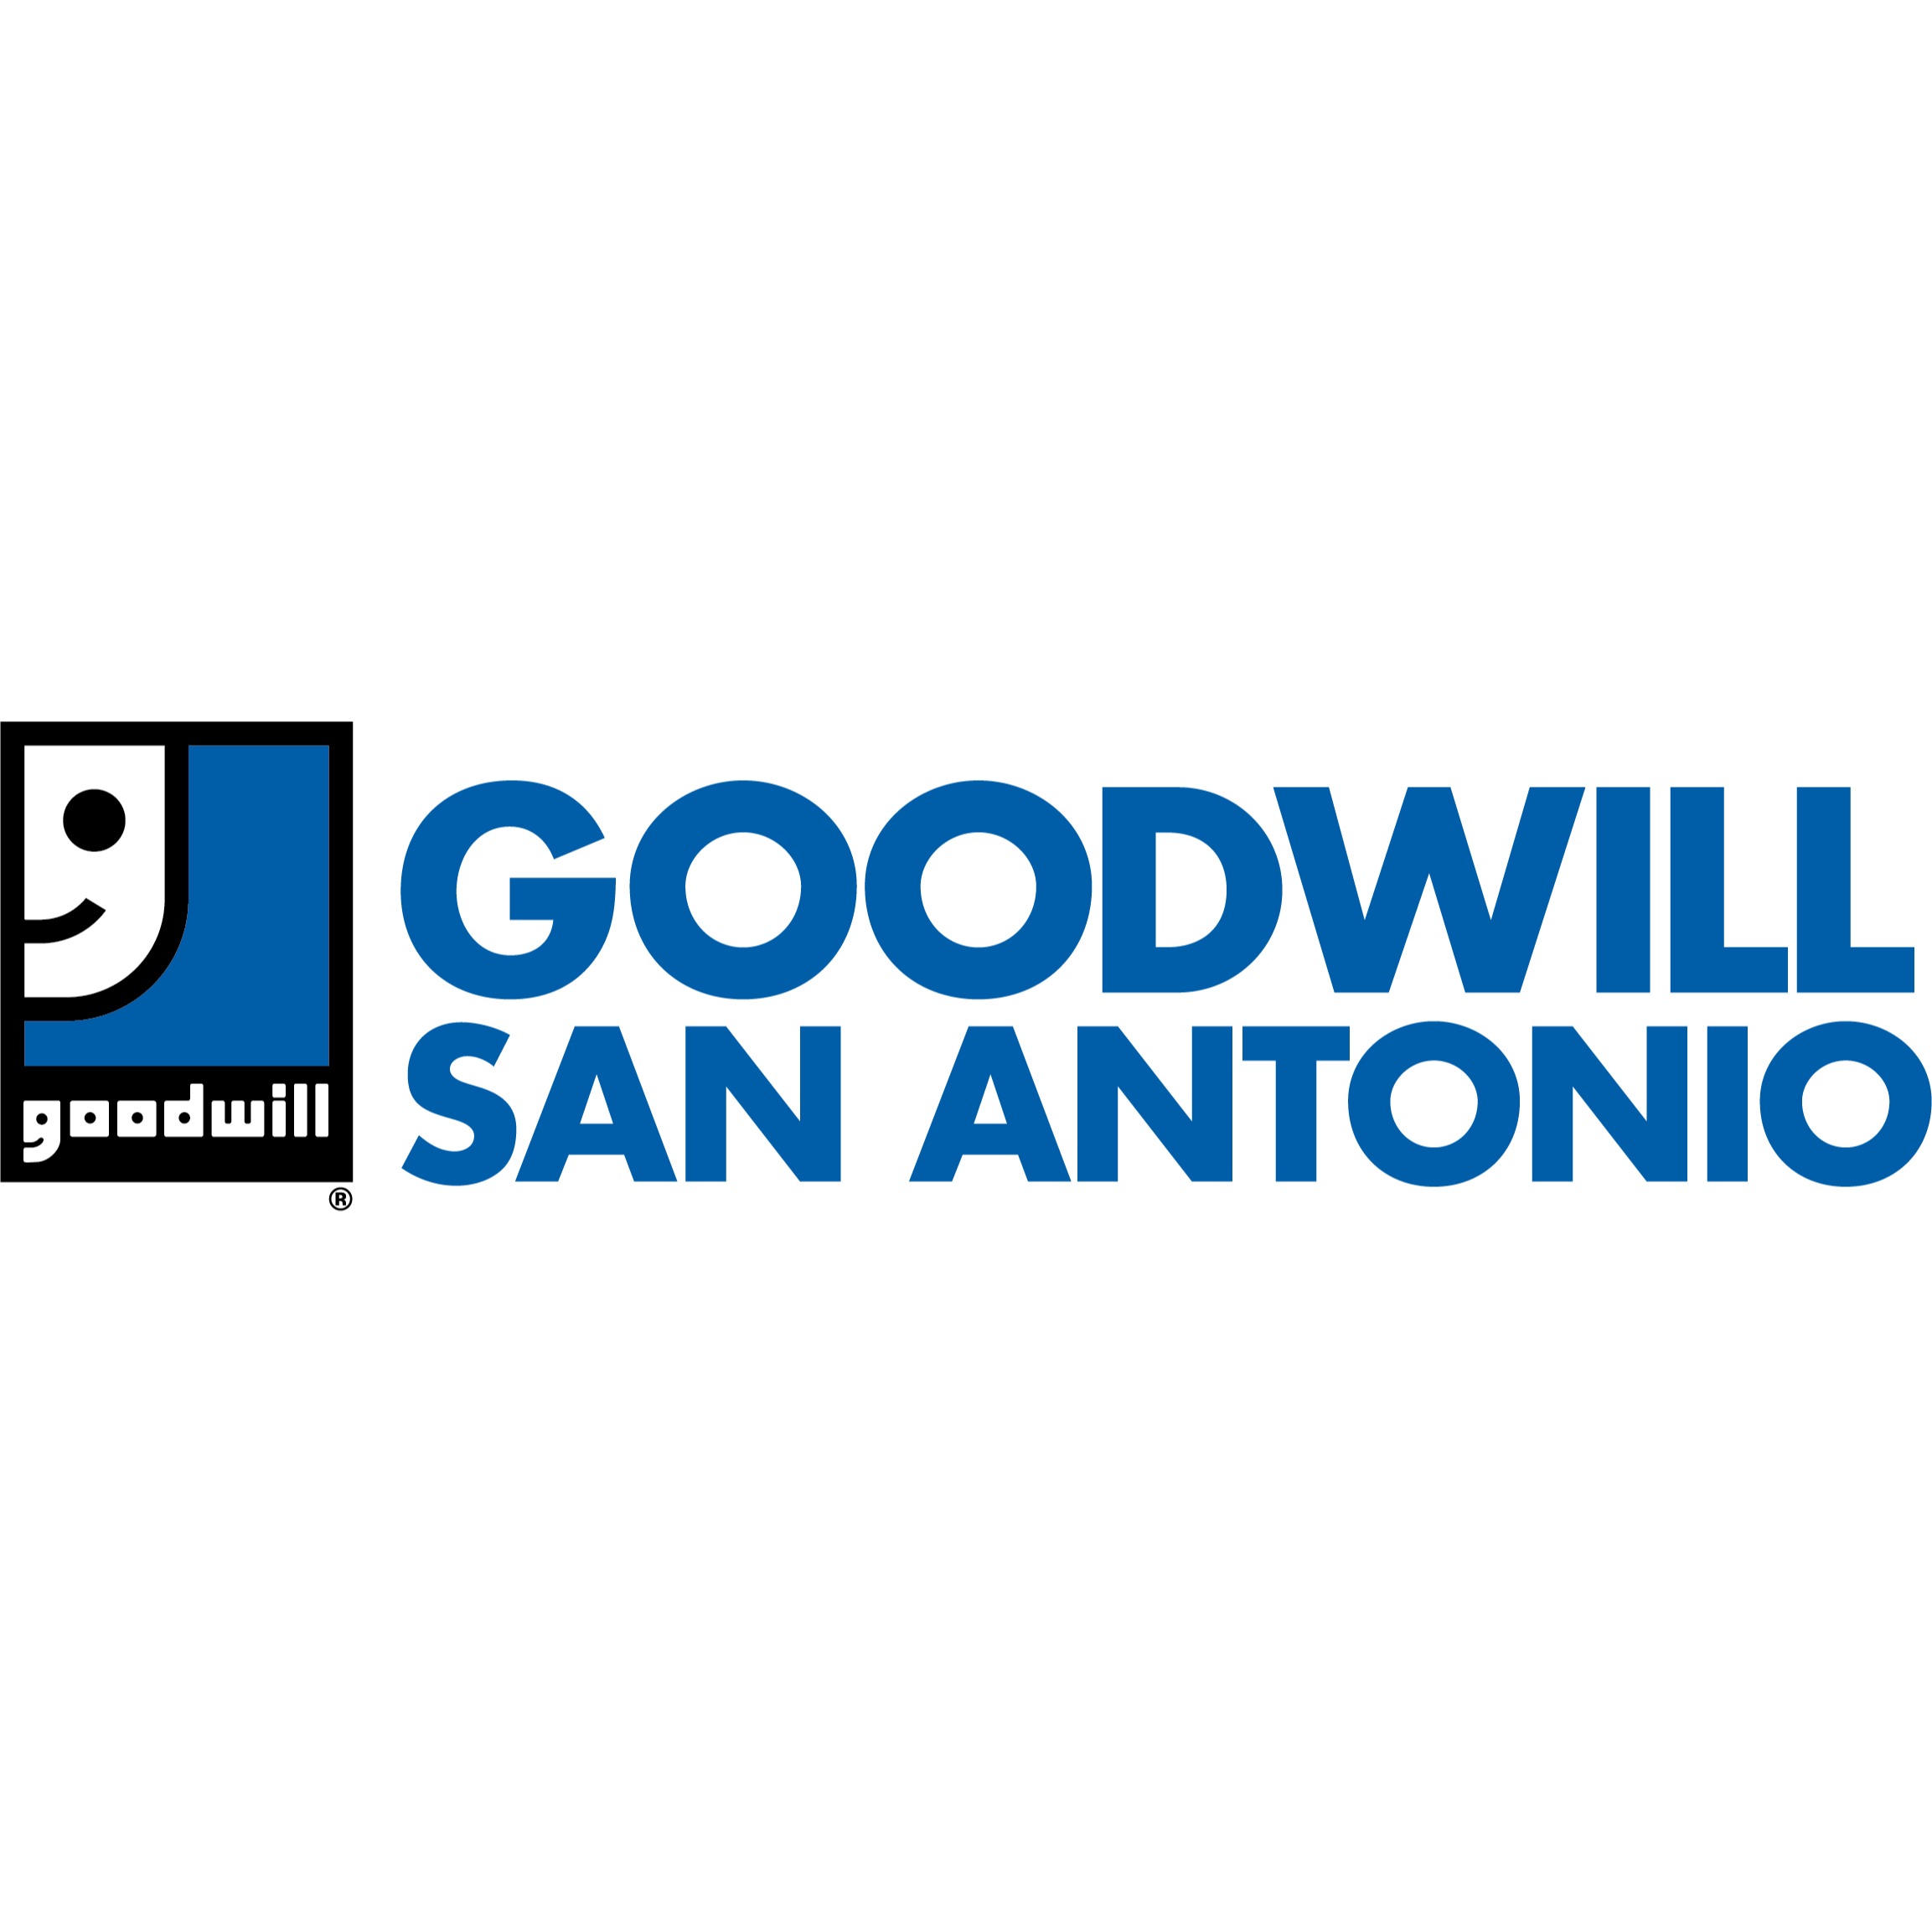 Goodwill Donation Station - San Antonio, TX 78258 - (210)924-8581 | ShowMeLocal.com